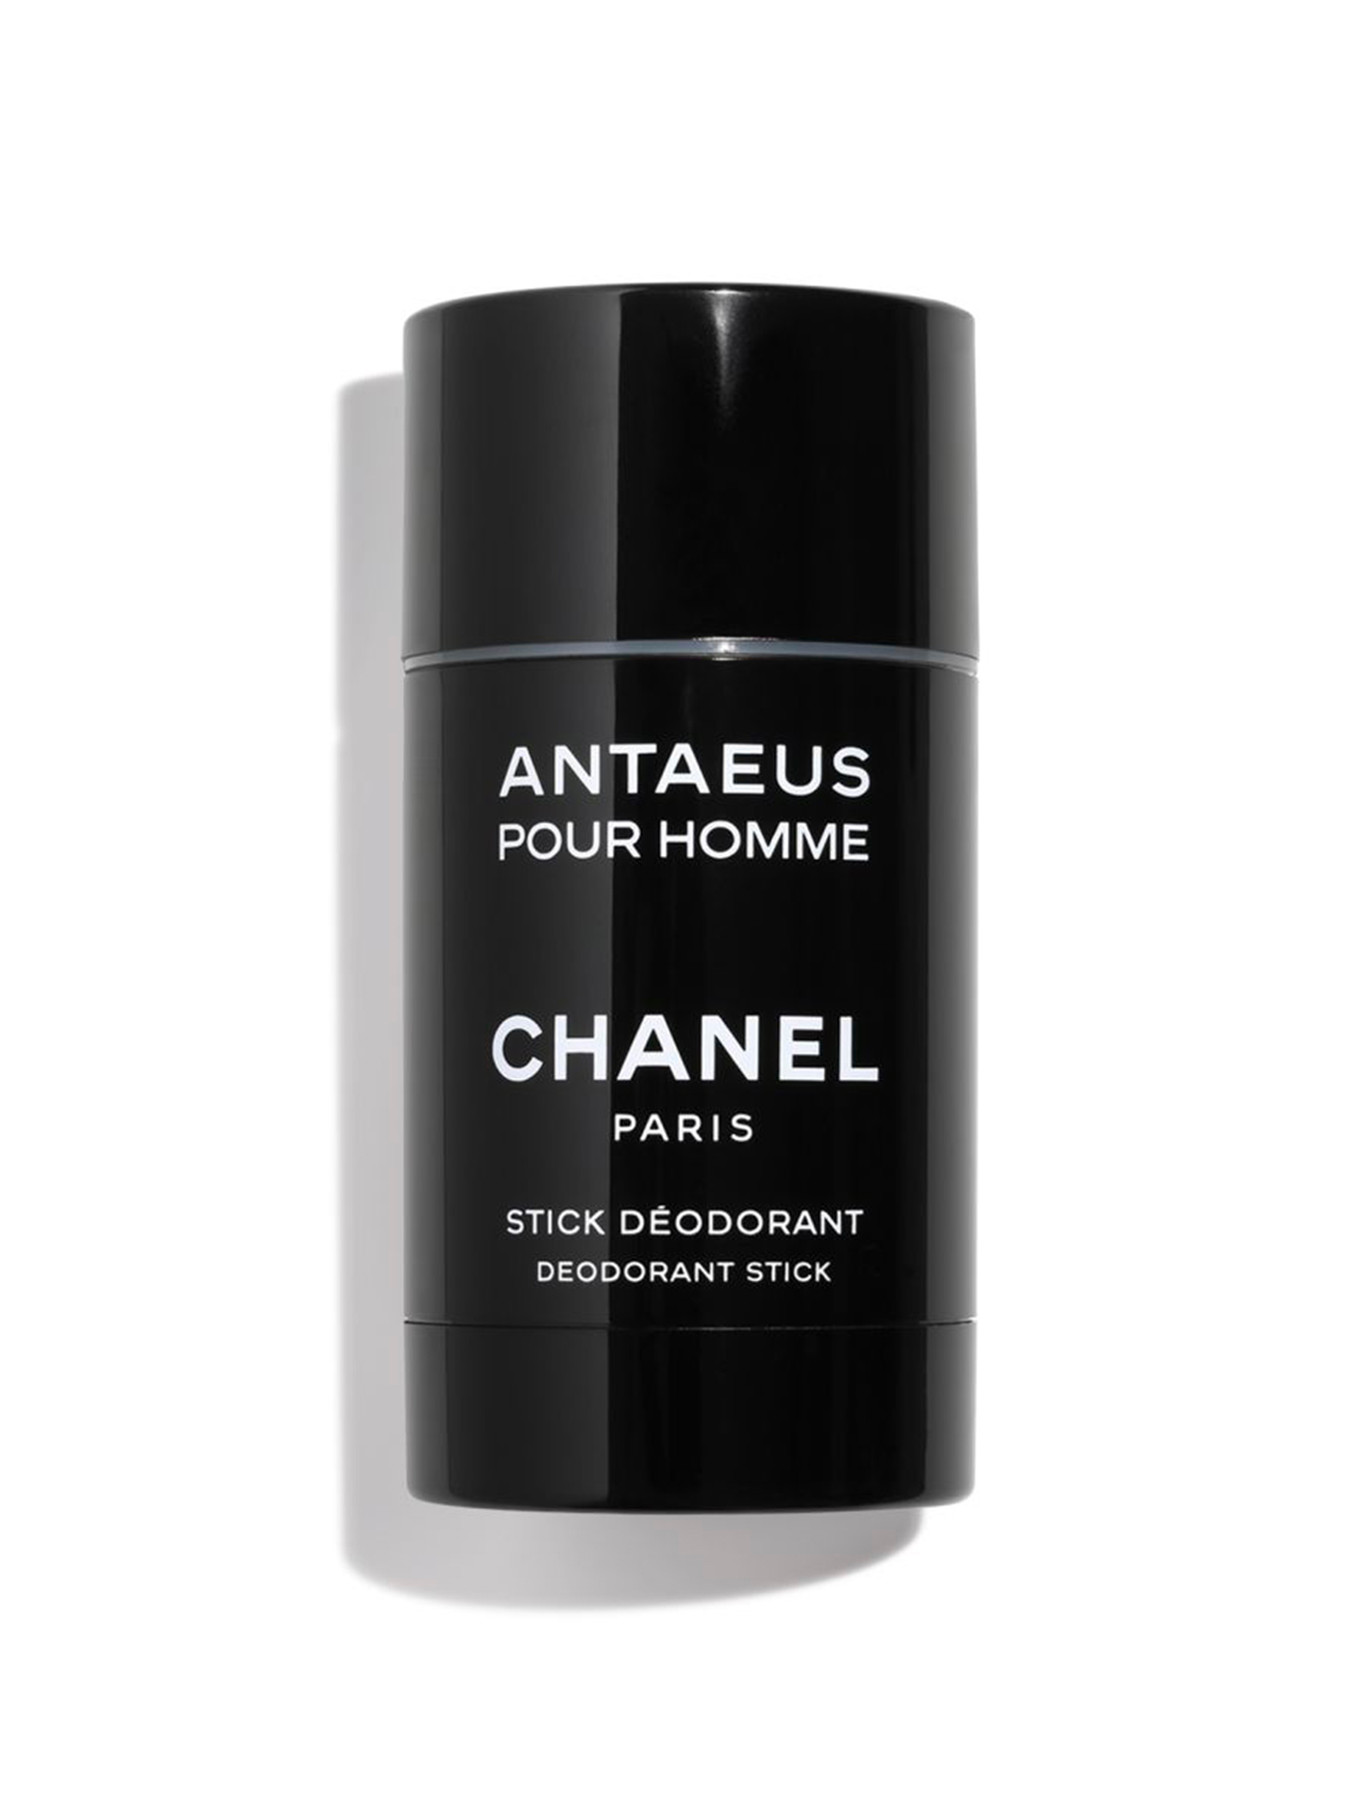 CHANEL ANTAEUS Deodorant Stick 60g | Fenwick